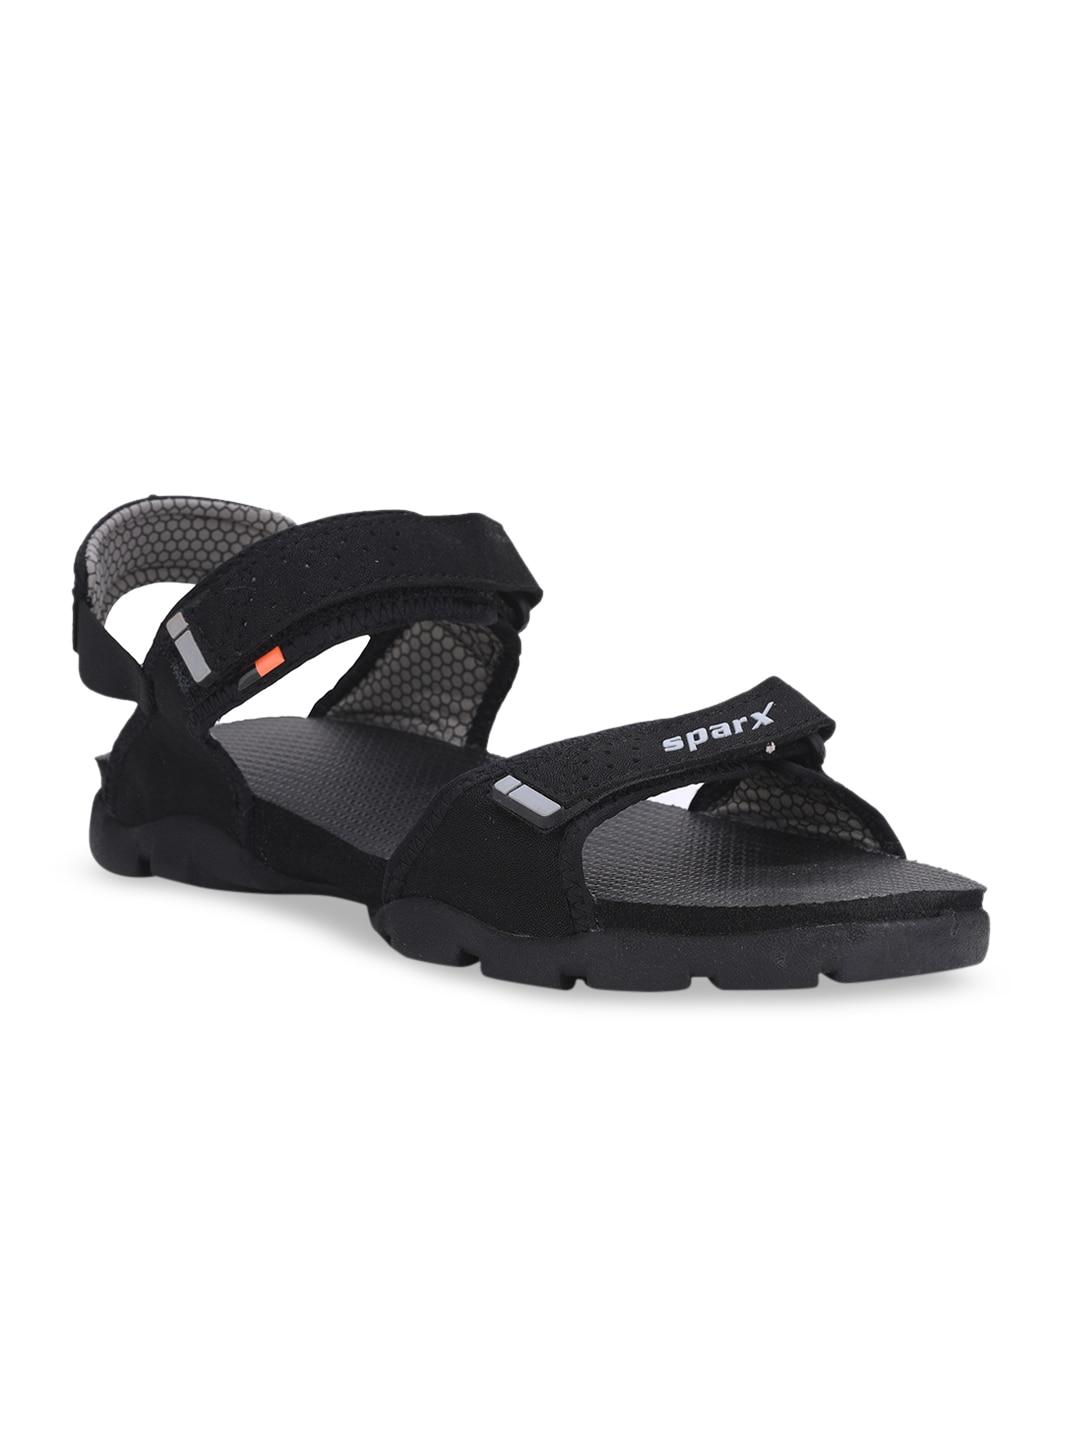 Sparx Men Black & Grey Solid Sports Sandals